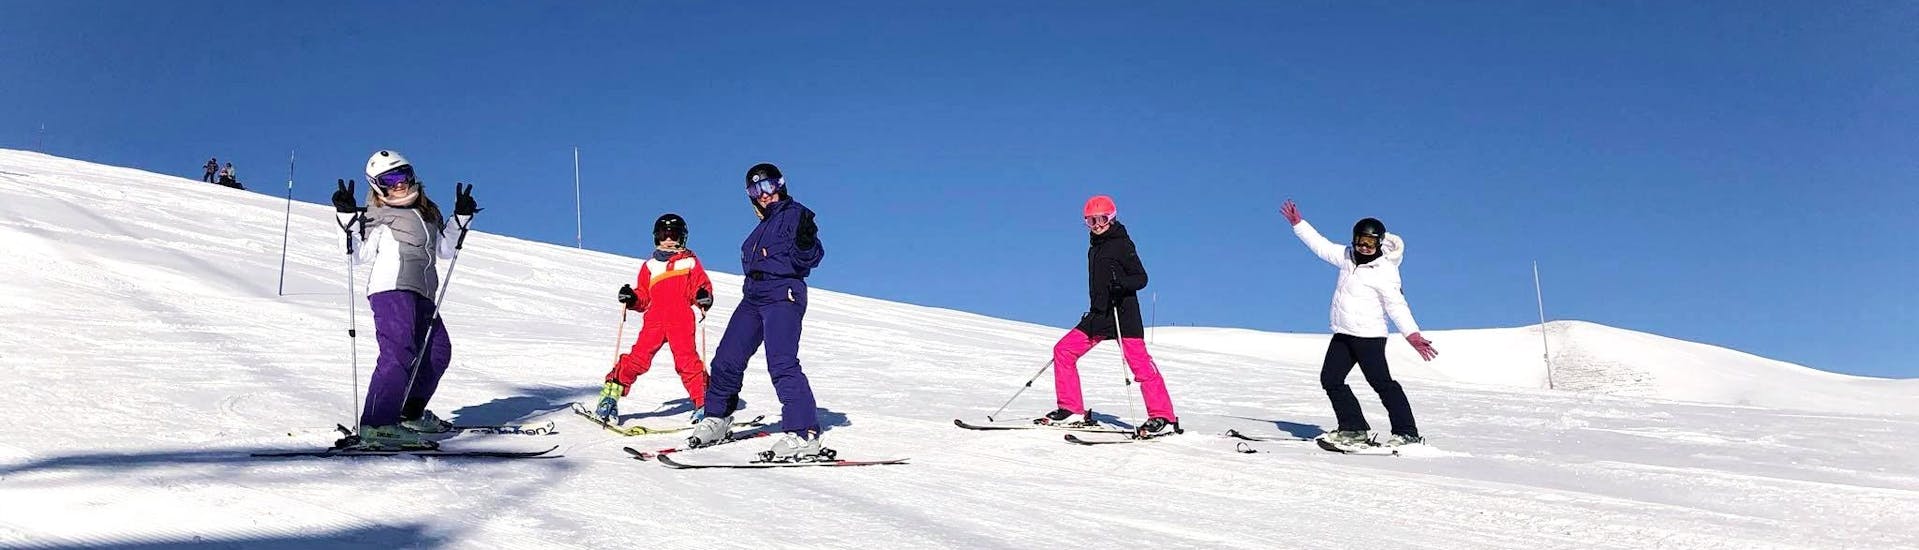 adult-ski-lessons-low-season-esi-la-toussuire-hero